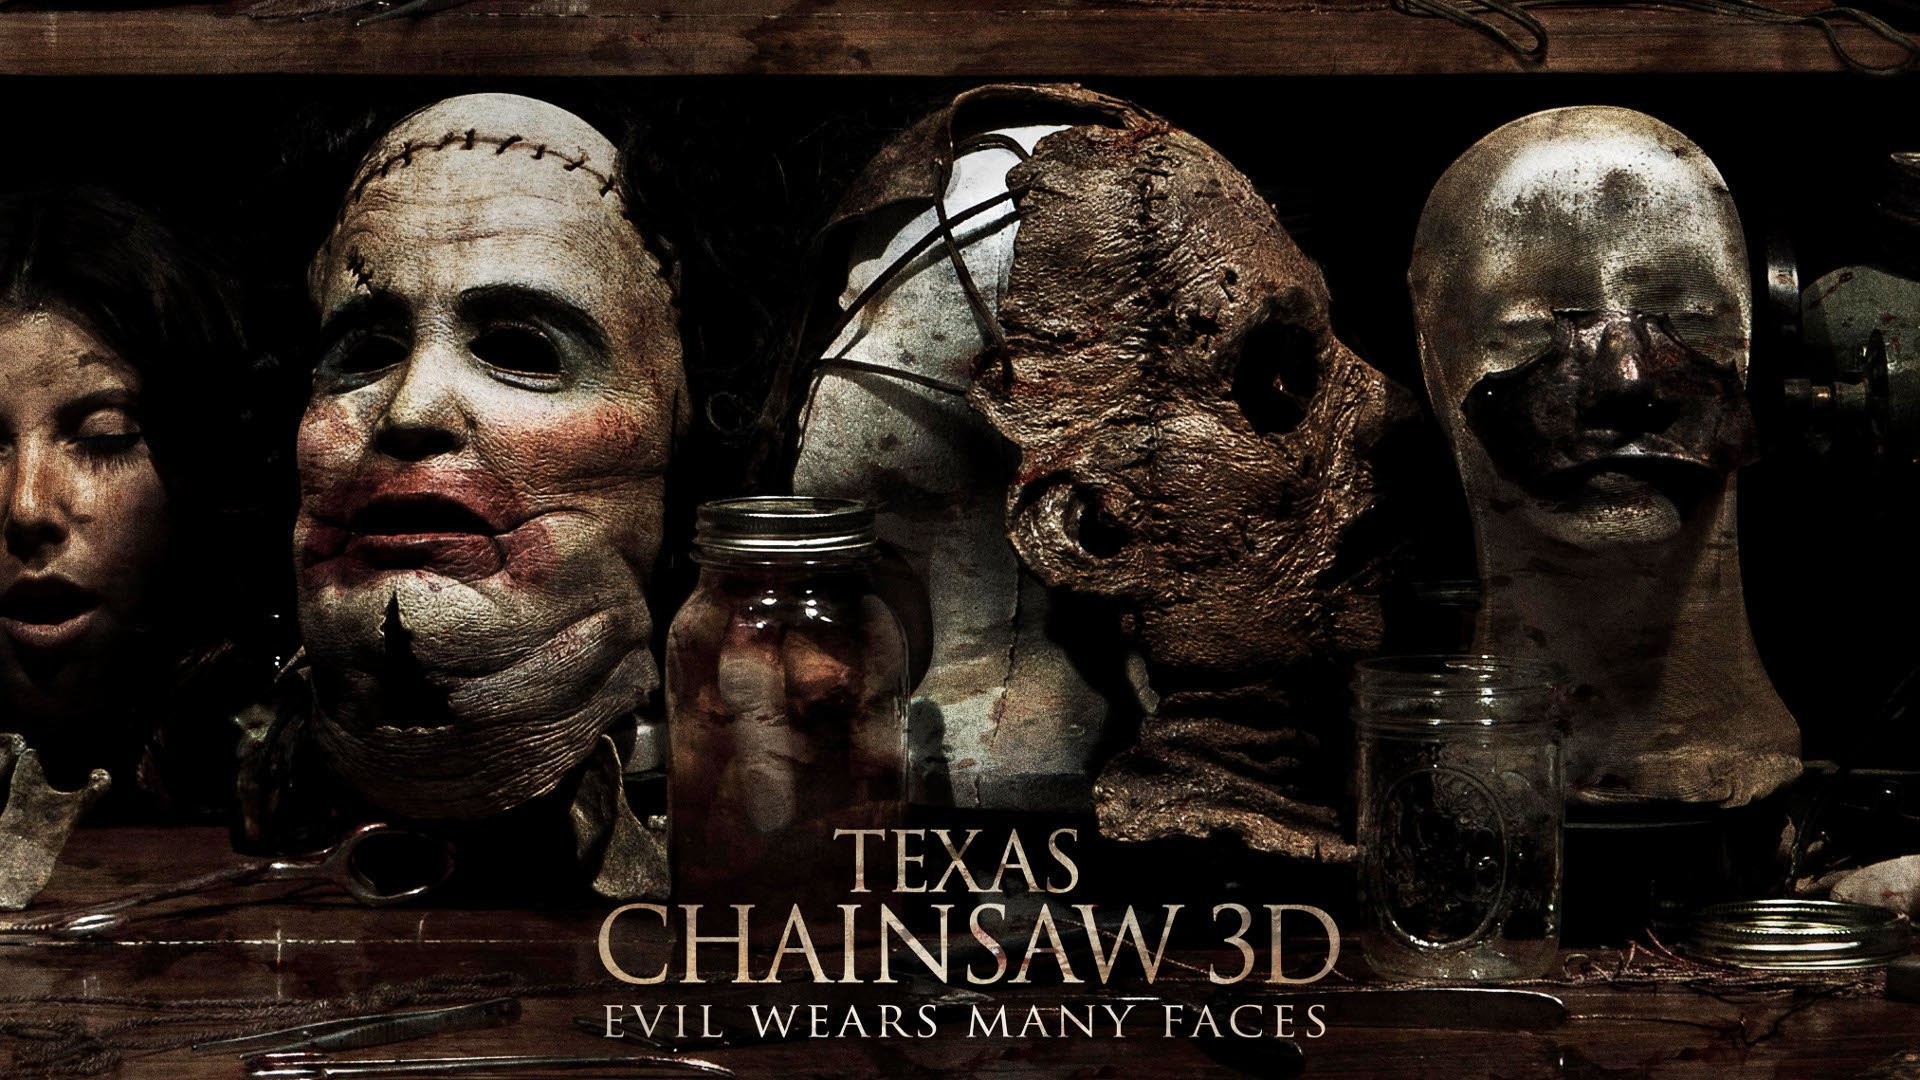 Texas Chainsaw Massacre Wallpaper.